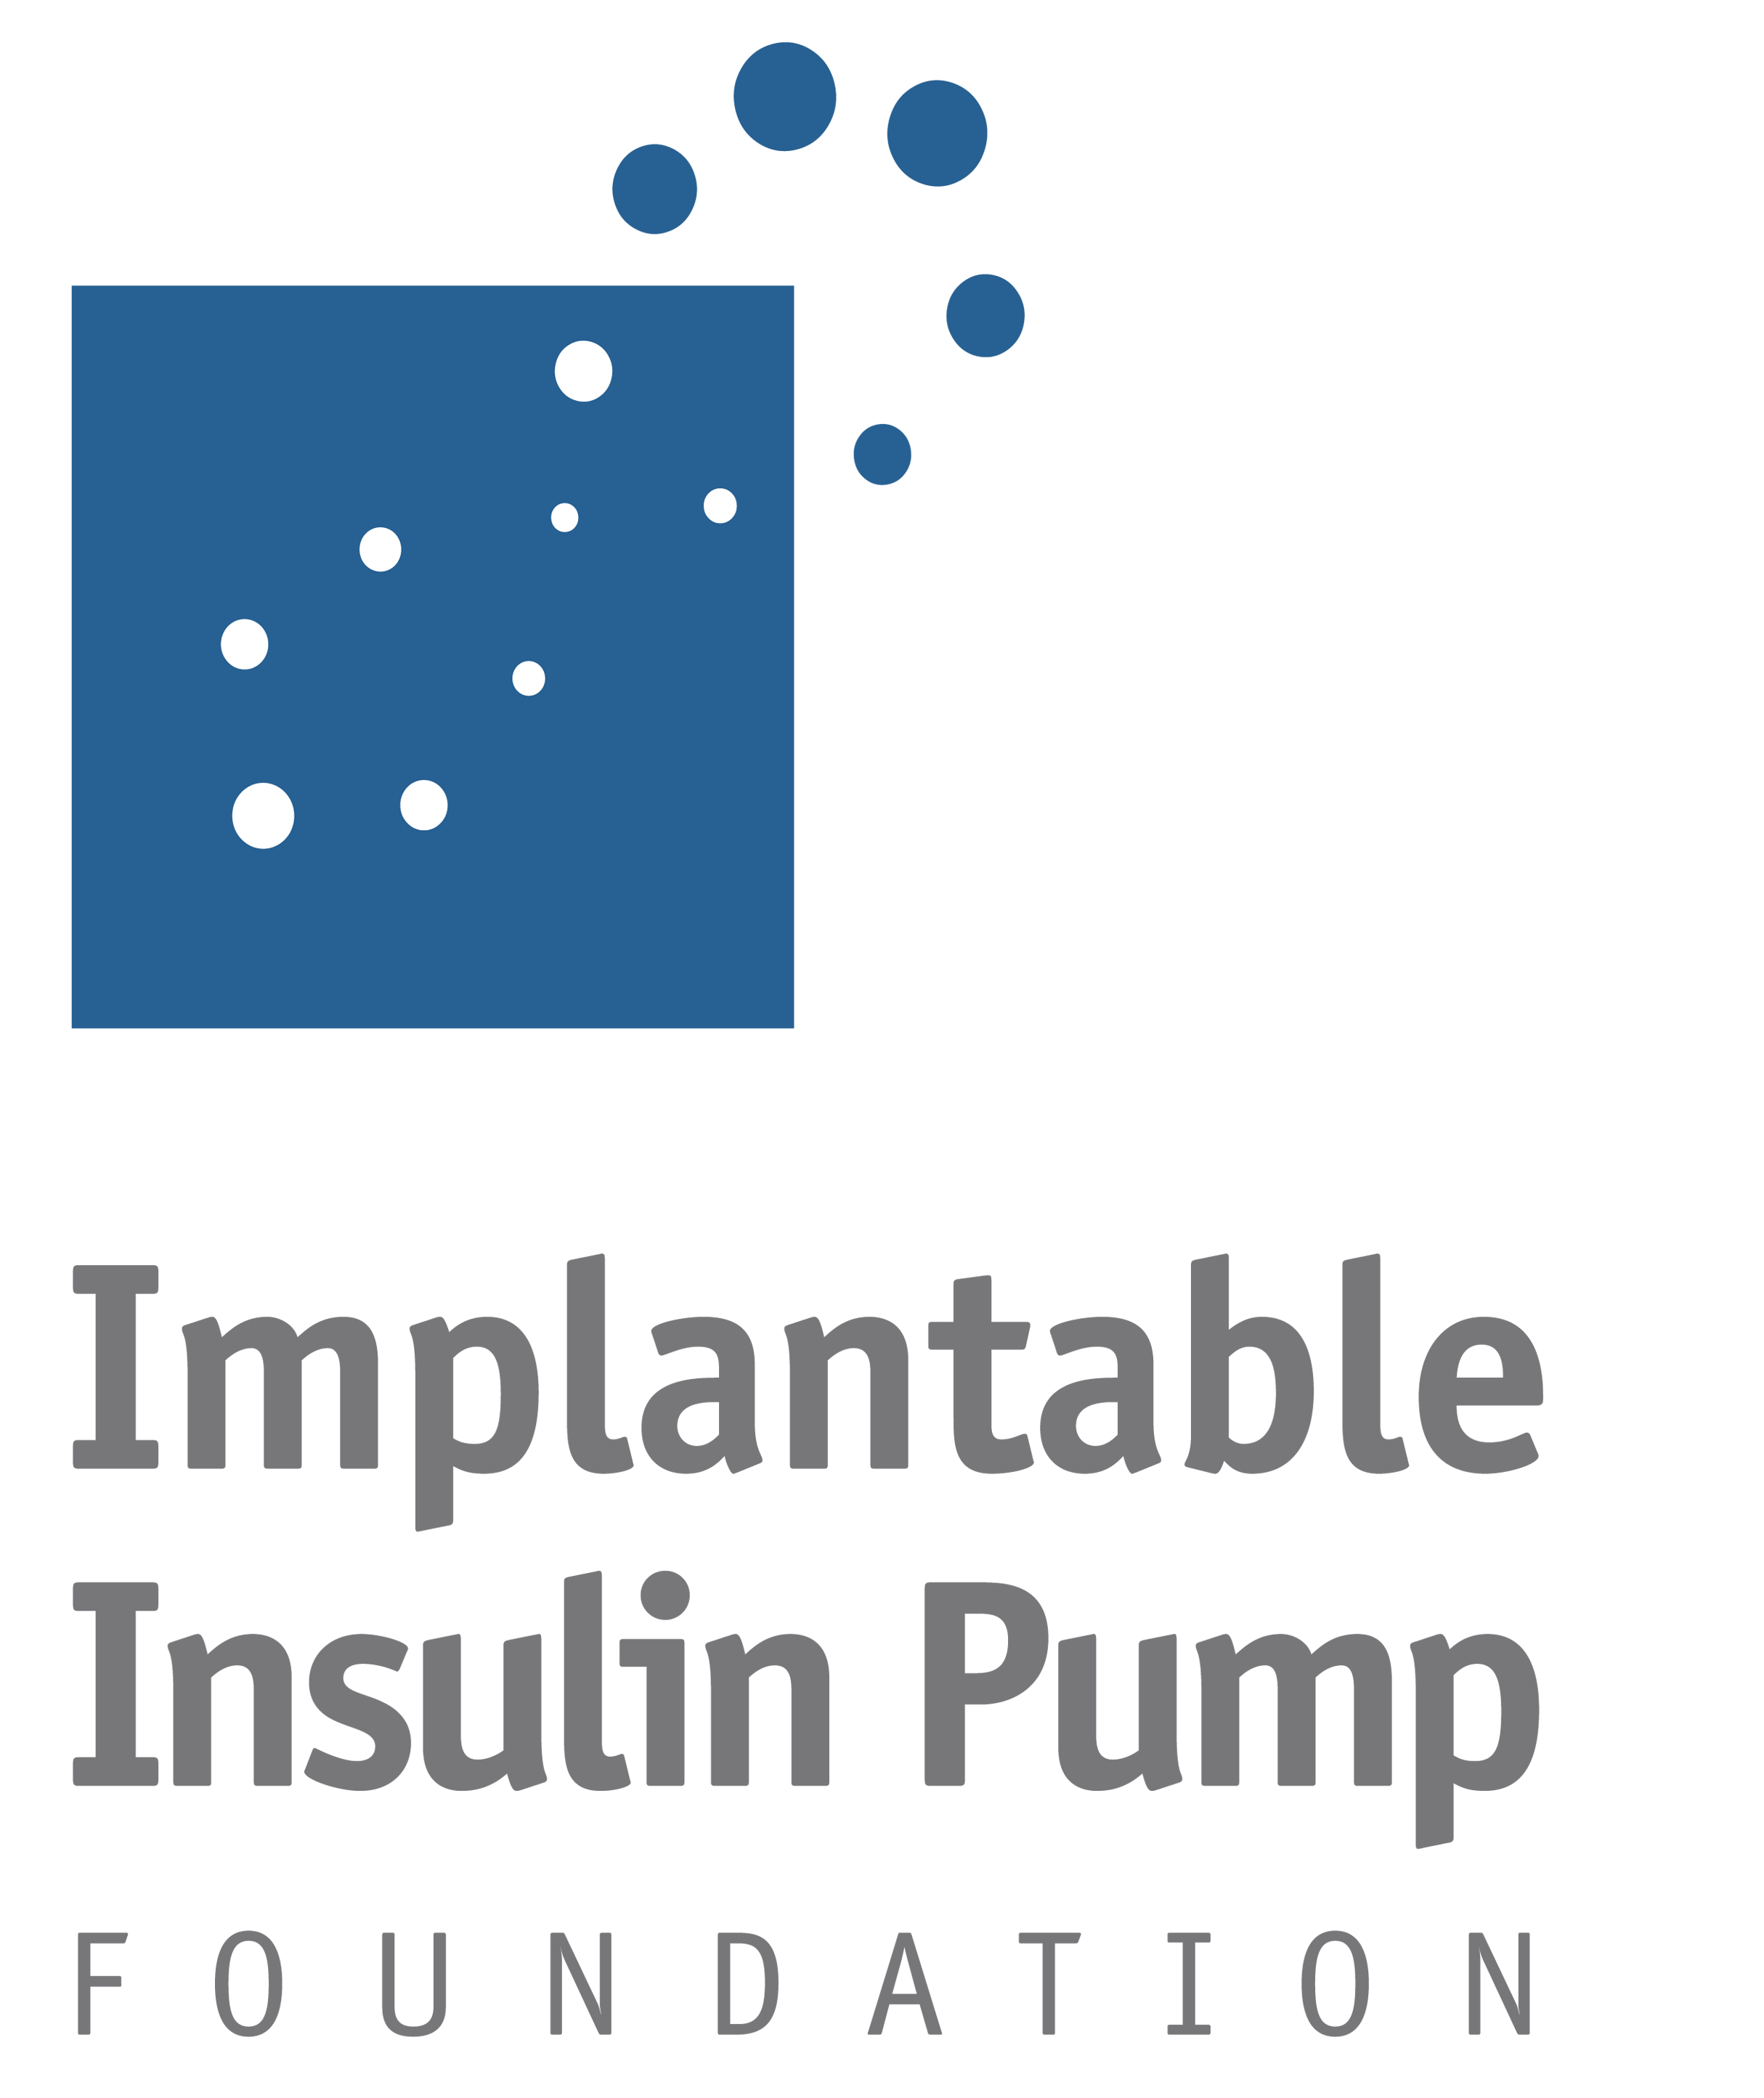 The Implantable Insulin Pump